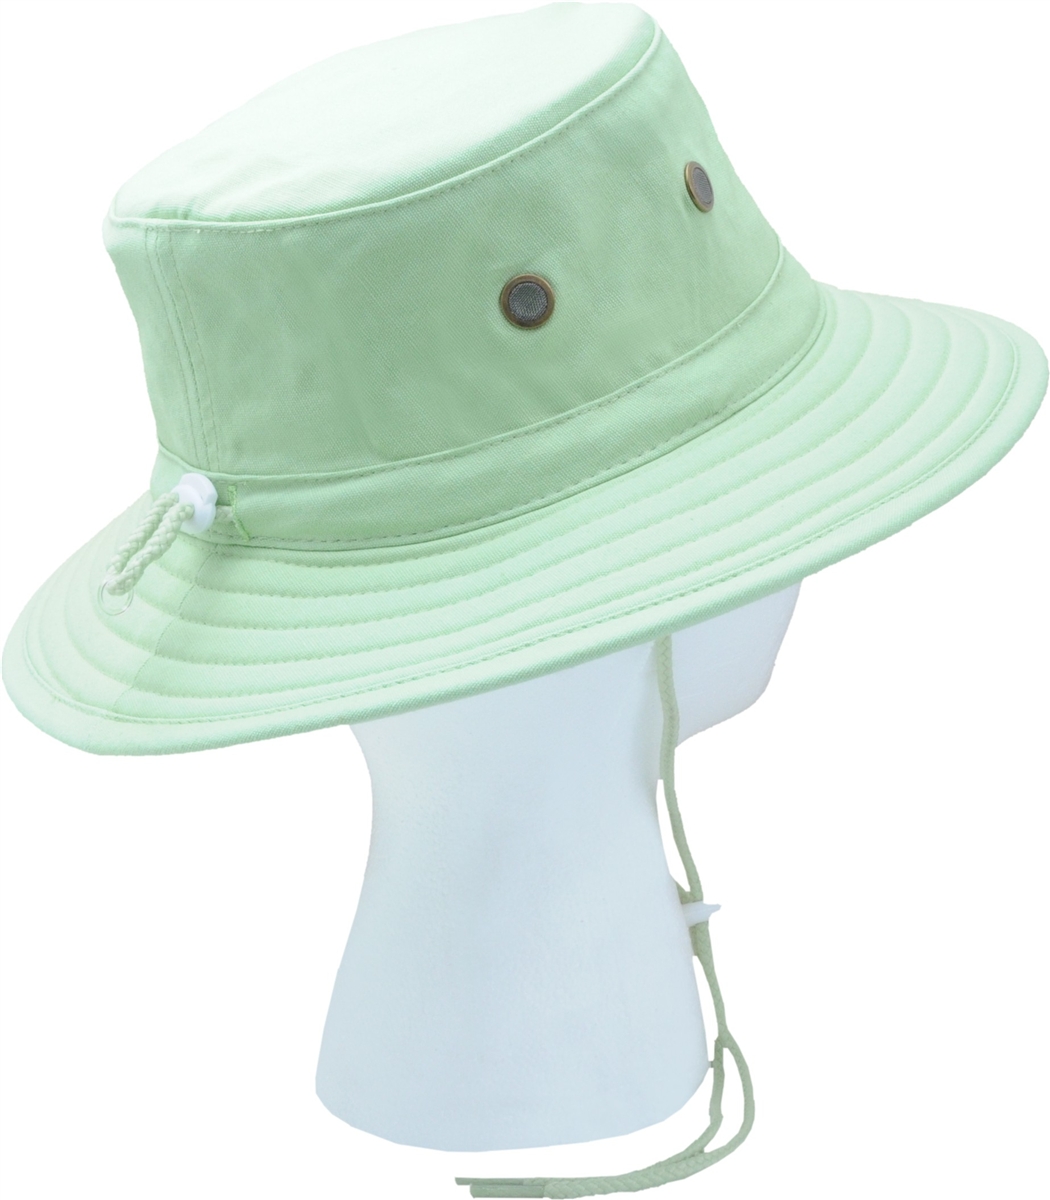 Sloggers Cotton Sun Hat with Wind Lanyard UPF 50+ Maximum Sun